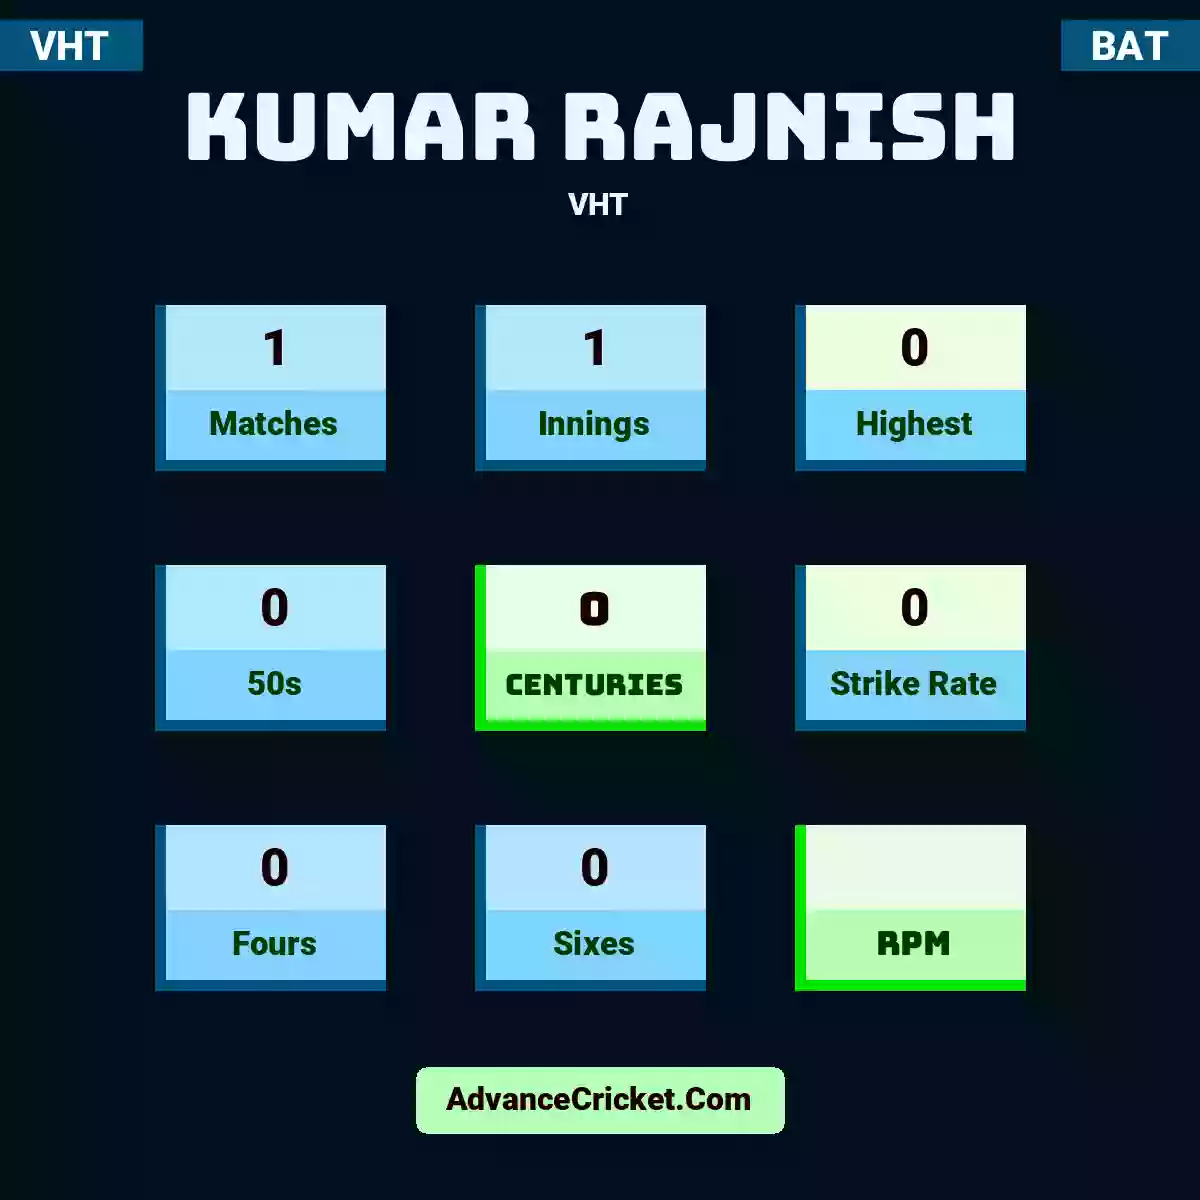 Kumar Rajnish VHT , Kumar Rajnish played 1 matches, scored 0 runs as highest, 0 half-centuries, and 0 centuries, with a strike rate of 0. K.Rajnish hit 0 fours and 0 sixes.